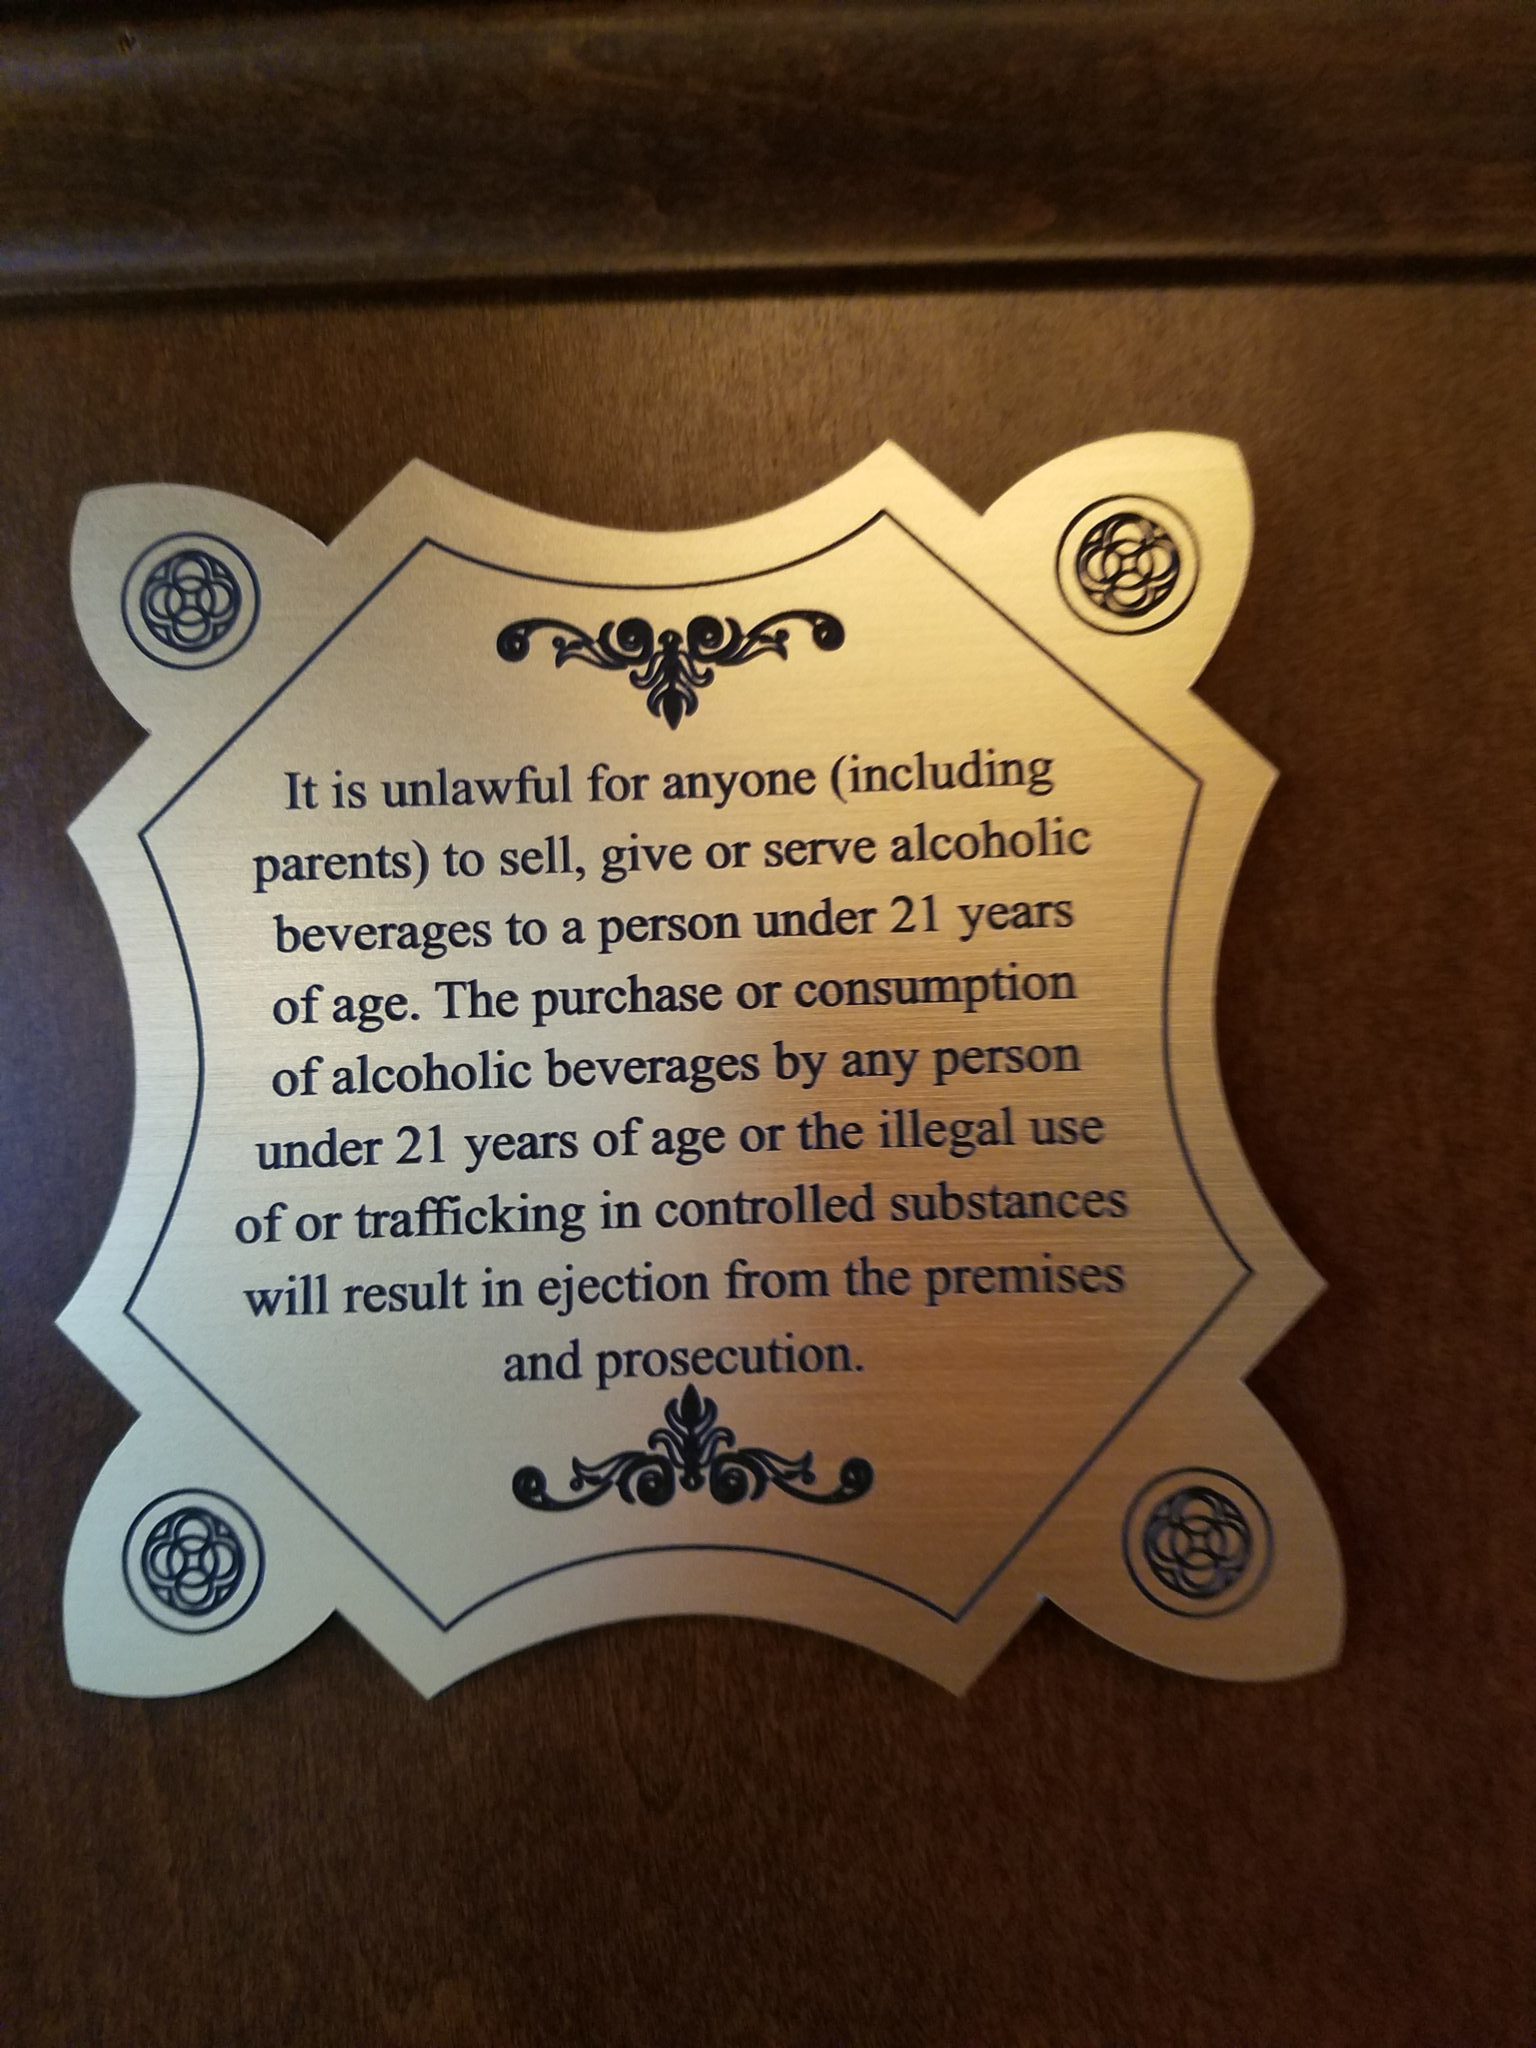 Alcohol Signs Now Visible at Magic Kingdom Restaurants